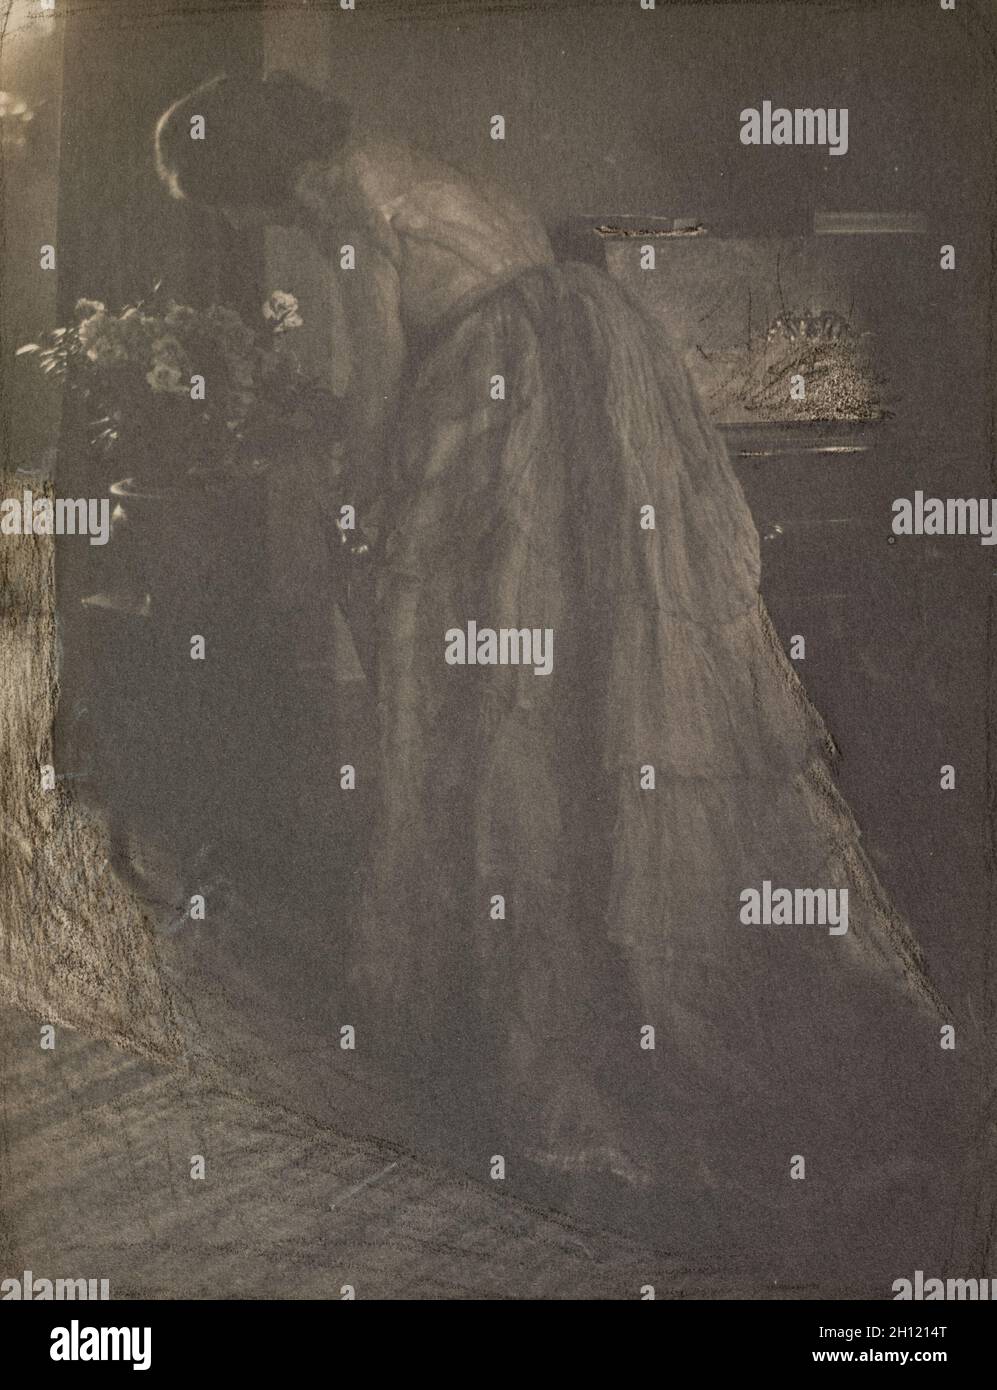 The Azalea Plant (Julia Hall McCune), c. 1900. Clarence H. White (American, 1871-1925). Platinum print with pencil; image: 19.5 x 15 cm (7 11/16 x 5 7/8 in.); paper: 38.9 x 29.3 cm (15 5/16 x 11 9/16 in.); matted: 45.7 x 35.6 cm (18 x 14 in.). Stock Photo